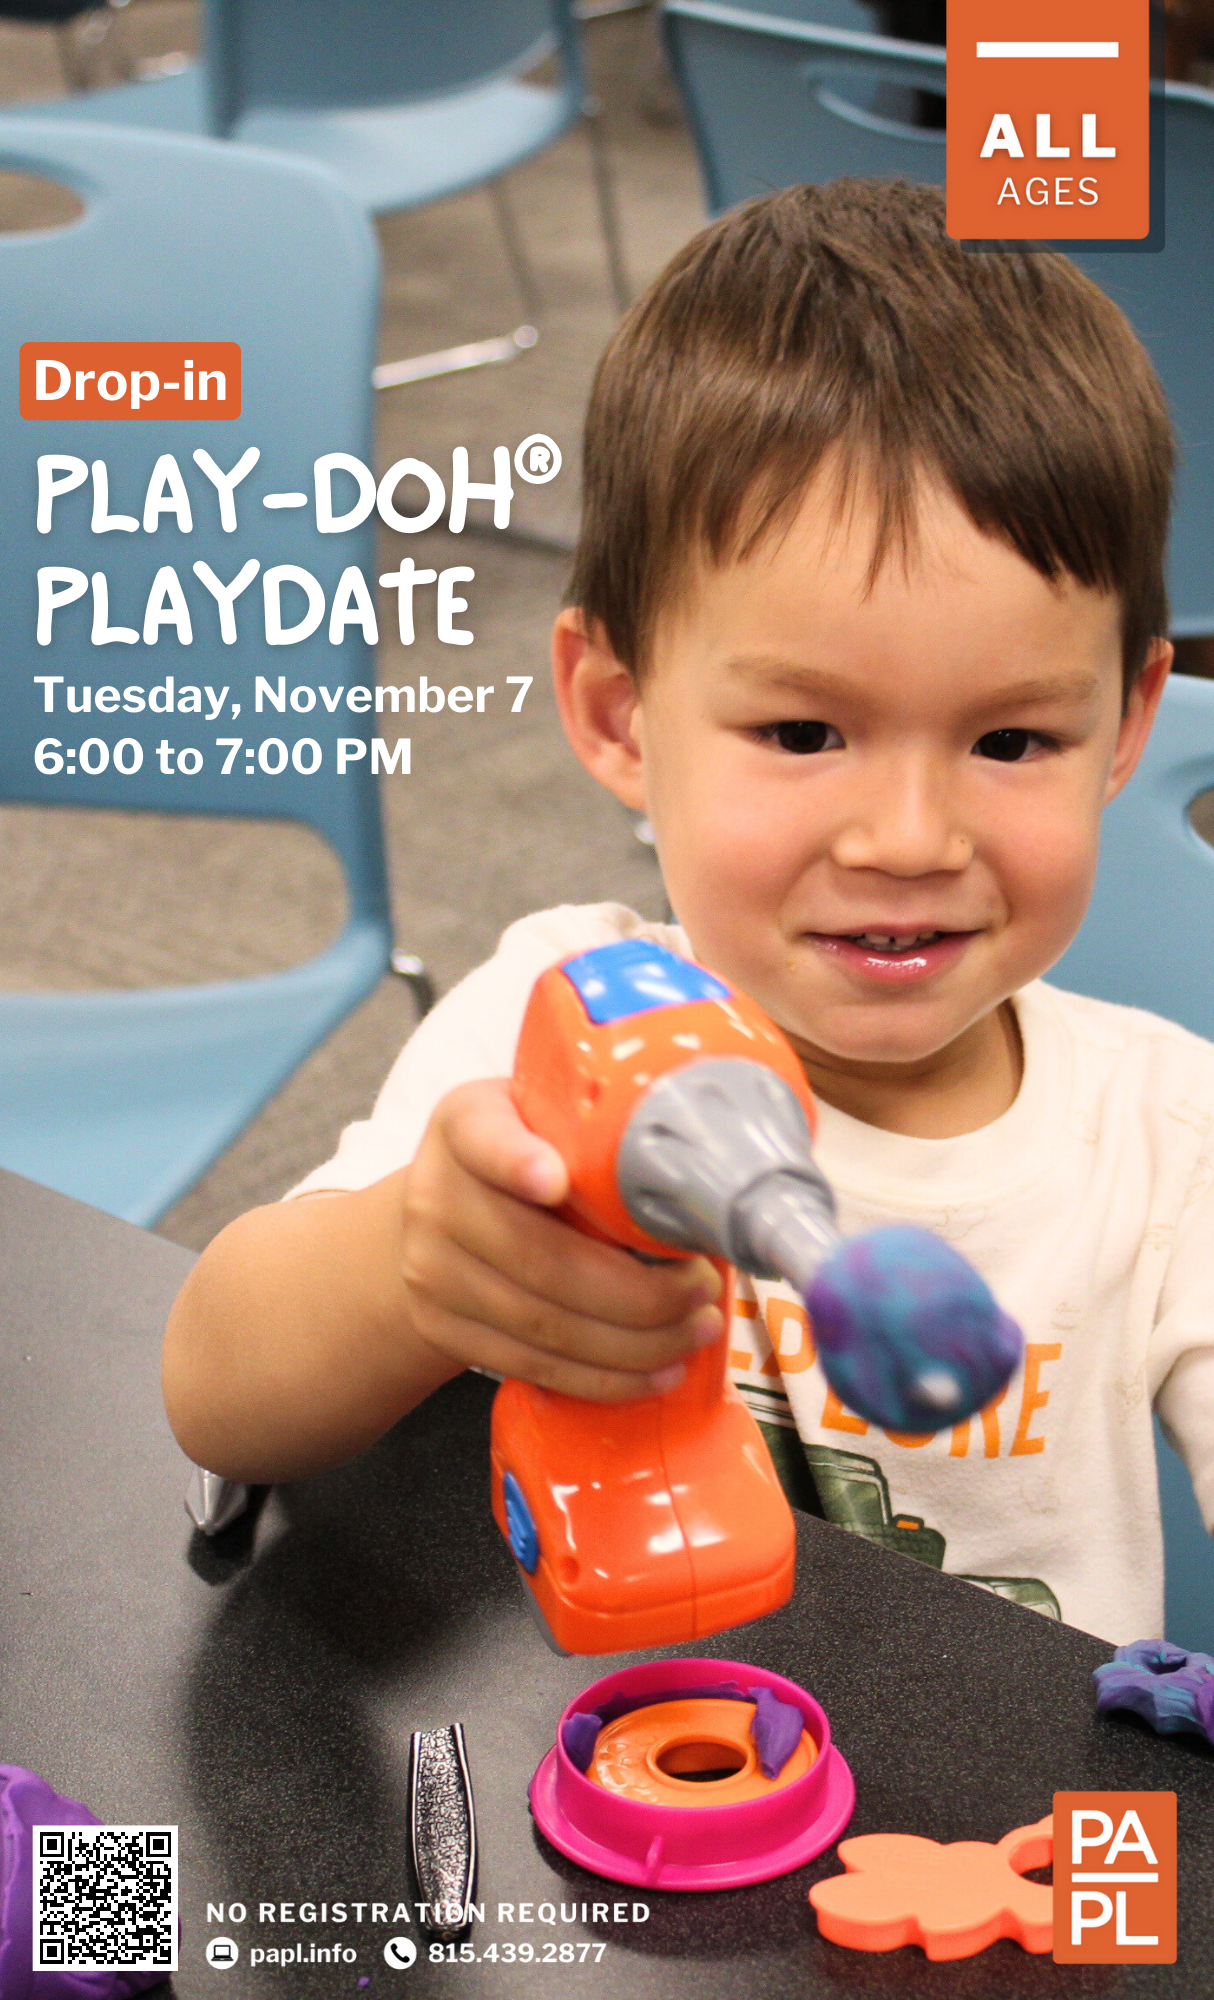 Drop-in Play-Doh Playdate November